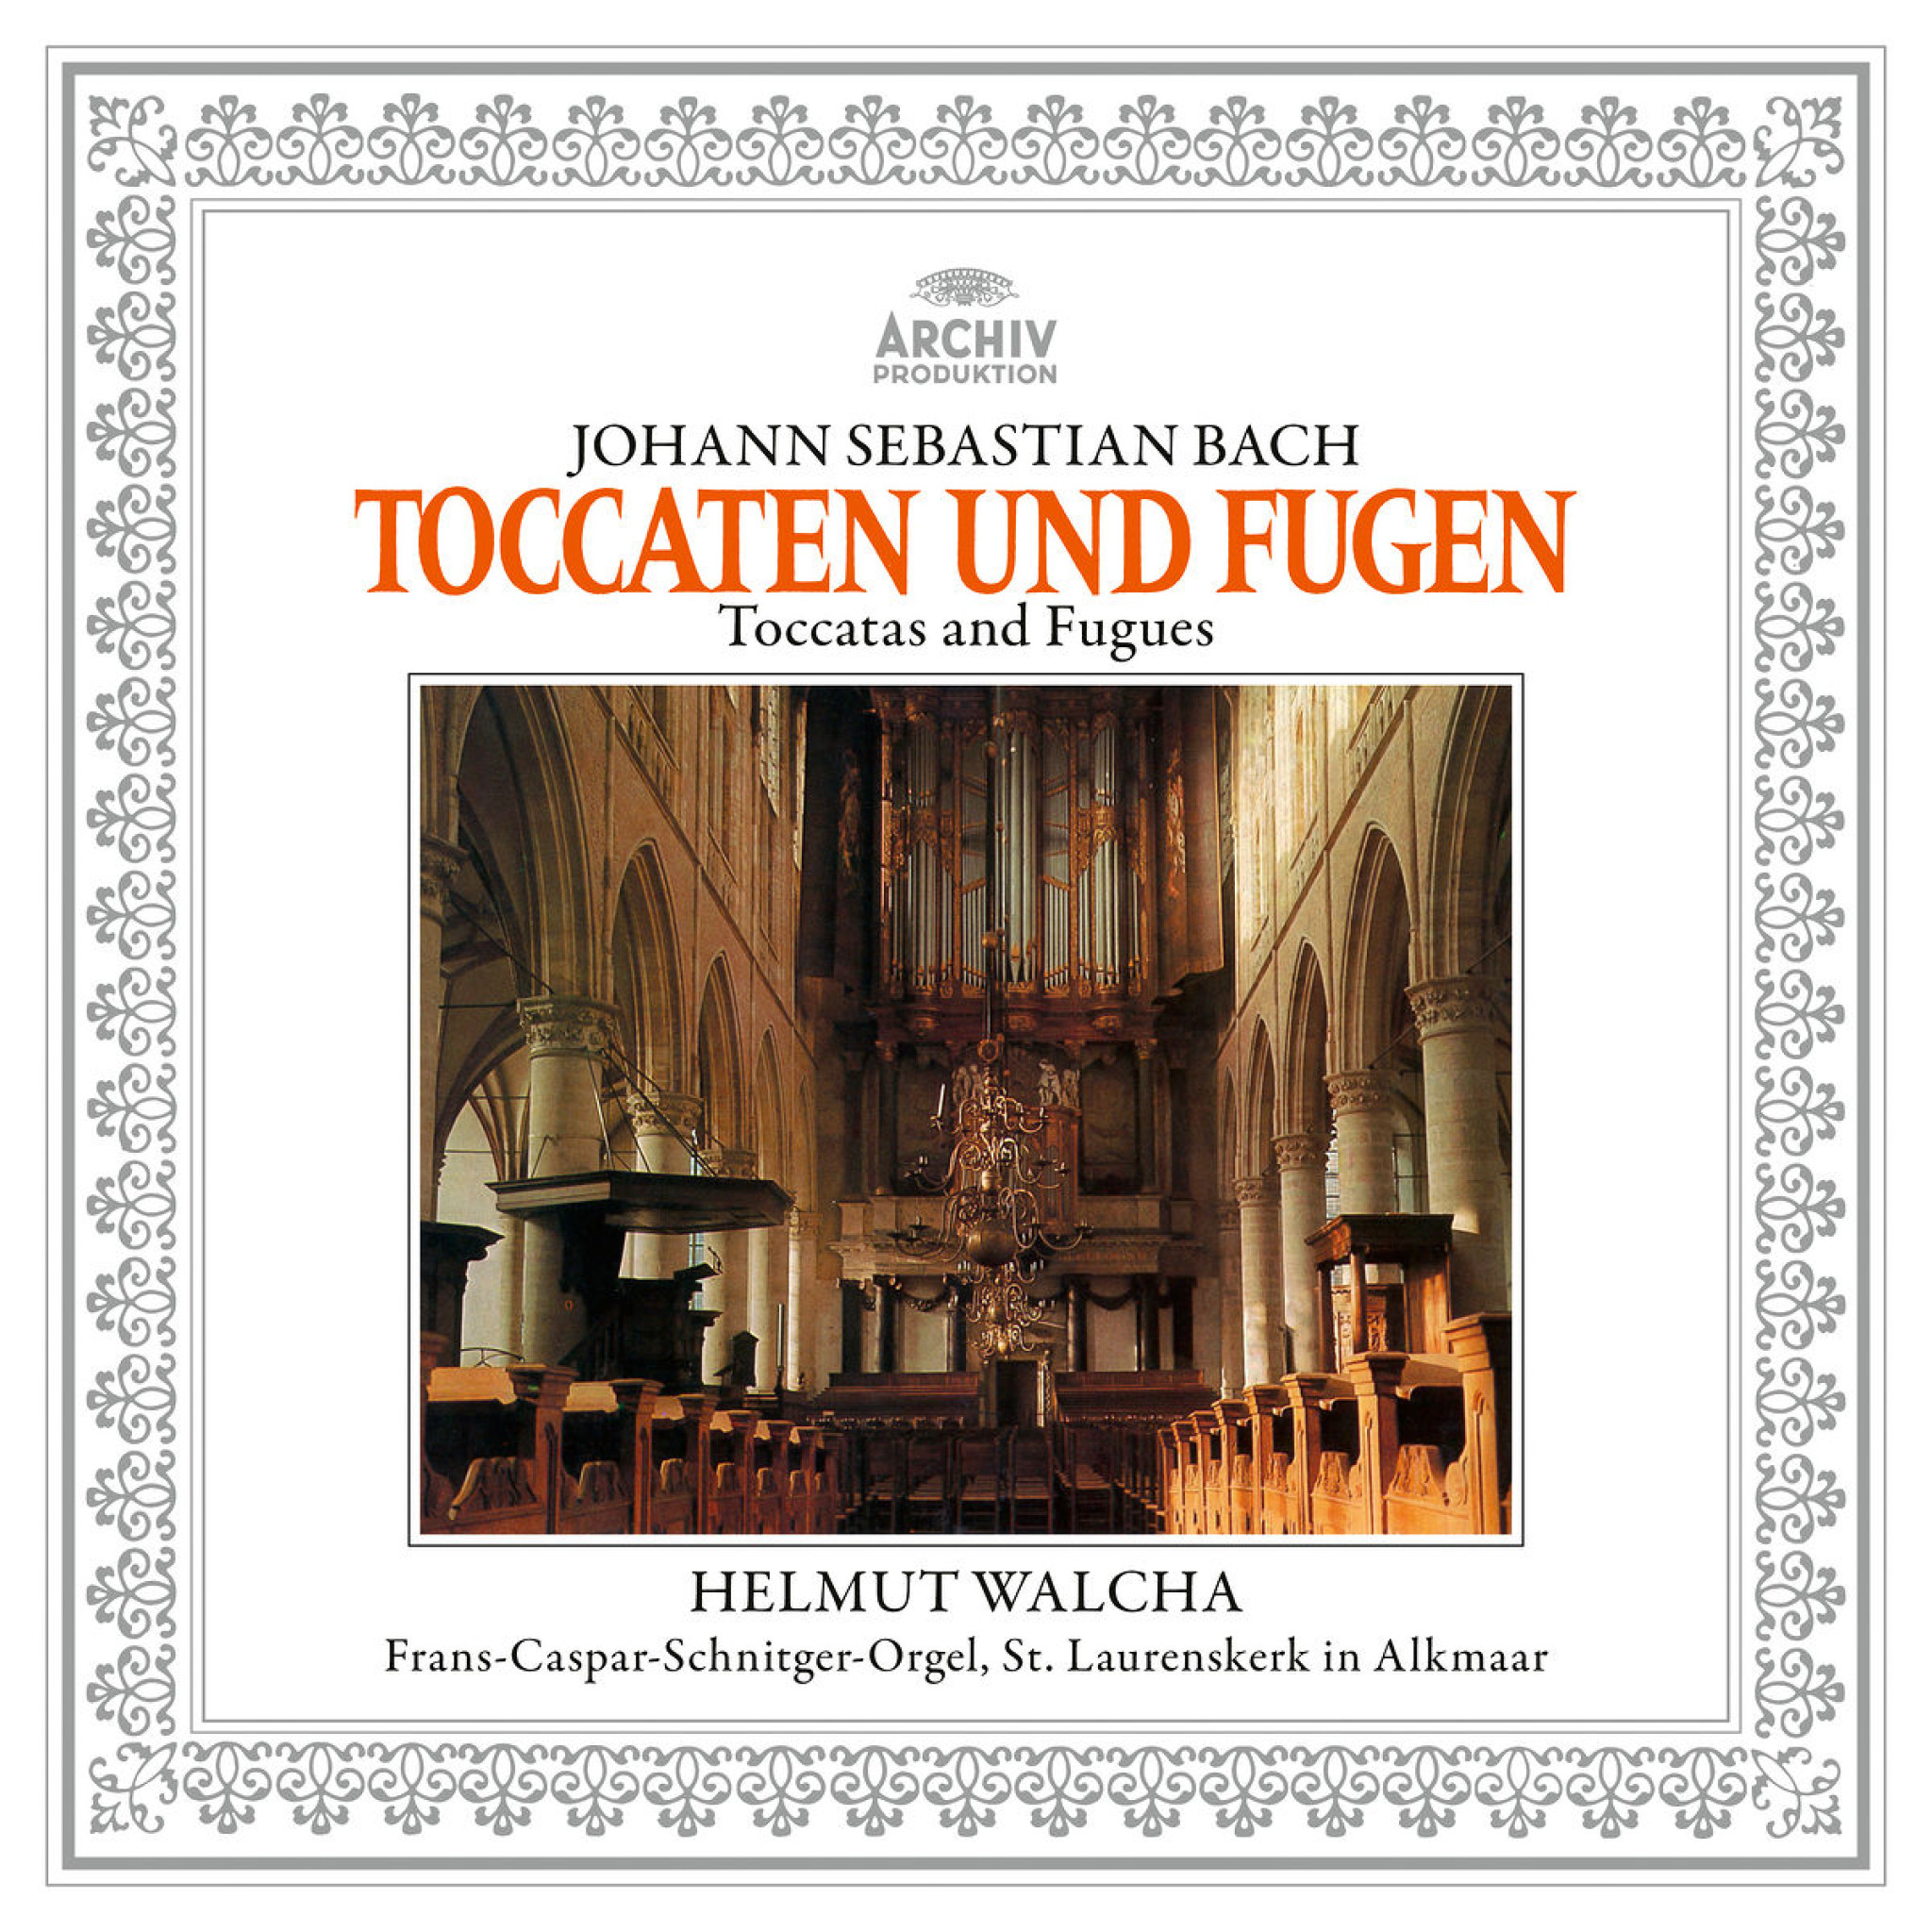 J.S.Bach: Toccaten & Fugen BWV 565, 540, 538, 564